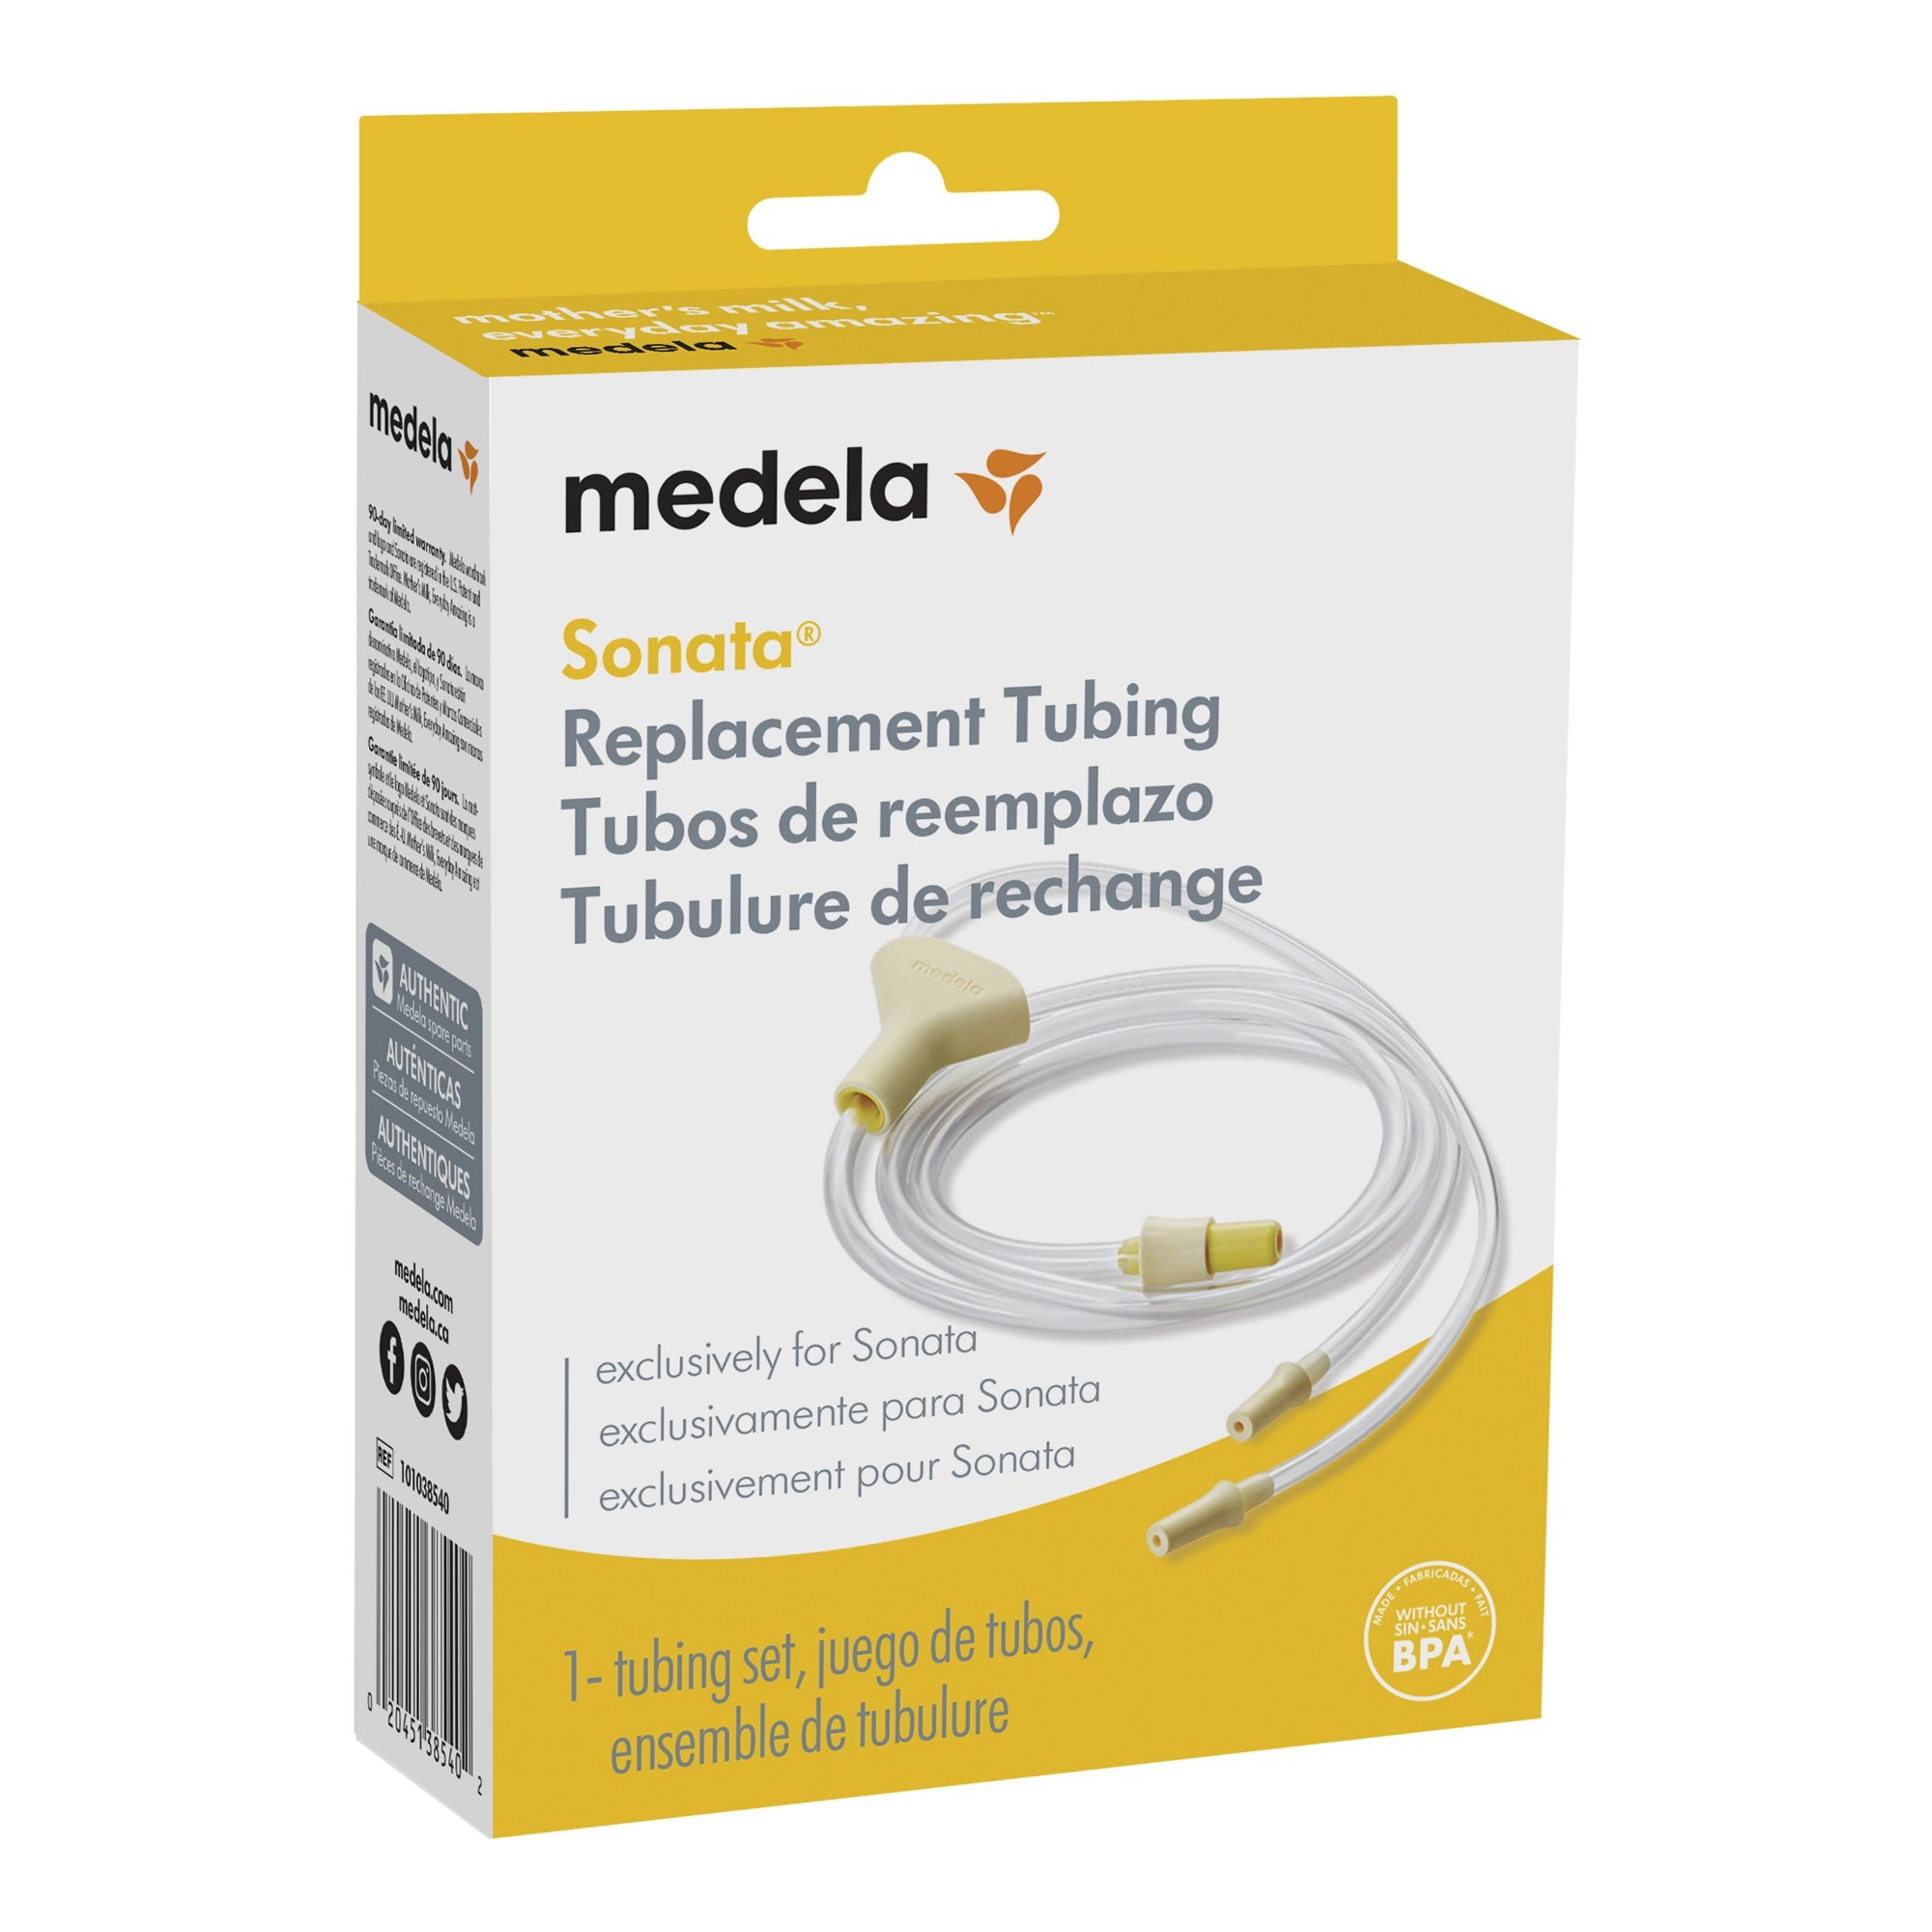 Replacement Tubing Medela Sonata For Medela Sonata Breast Pump